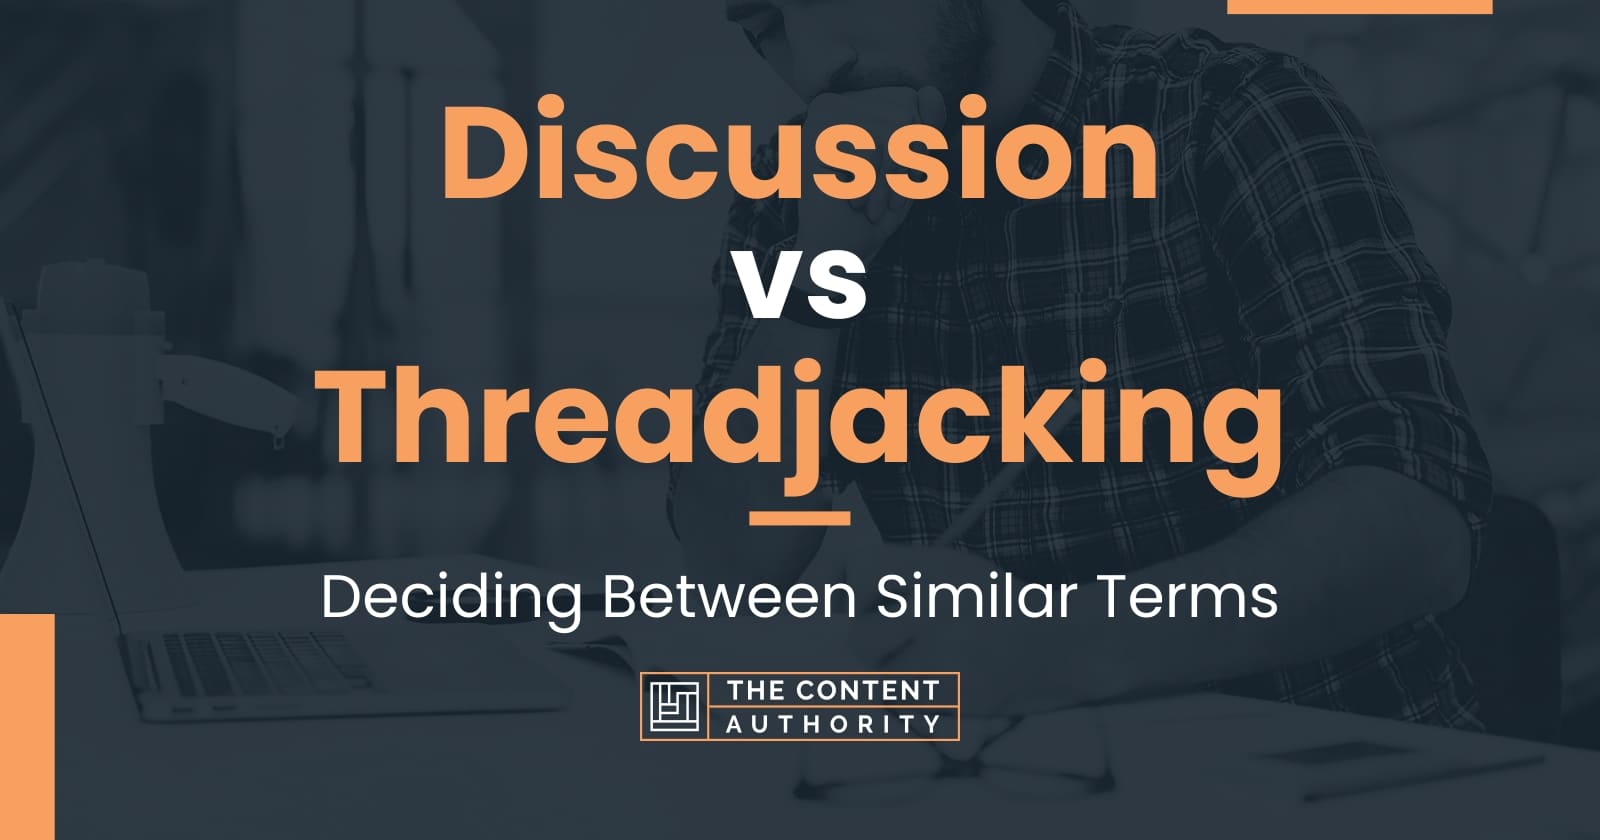 Discussion vs Threadjacking: Deciding Between Similar Terms